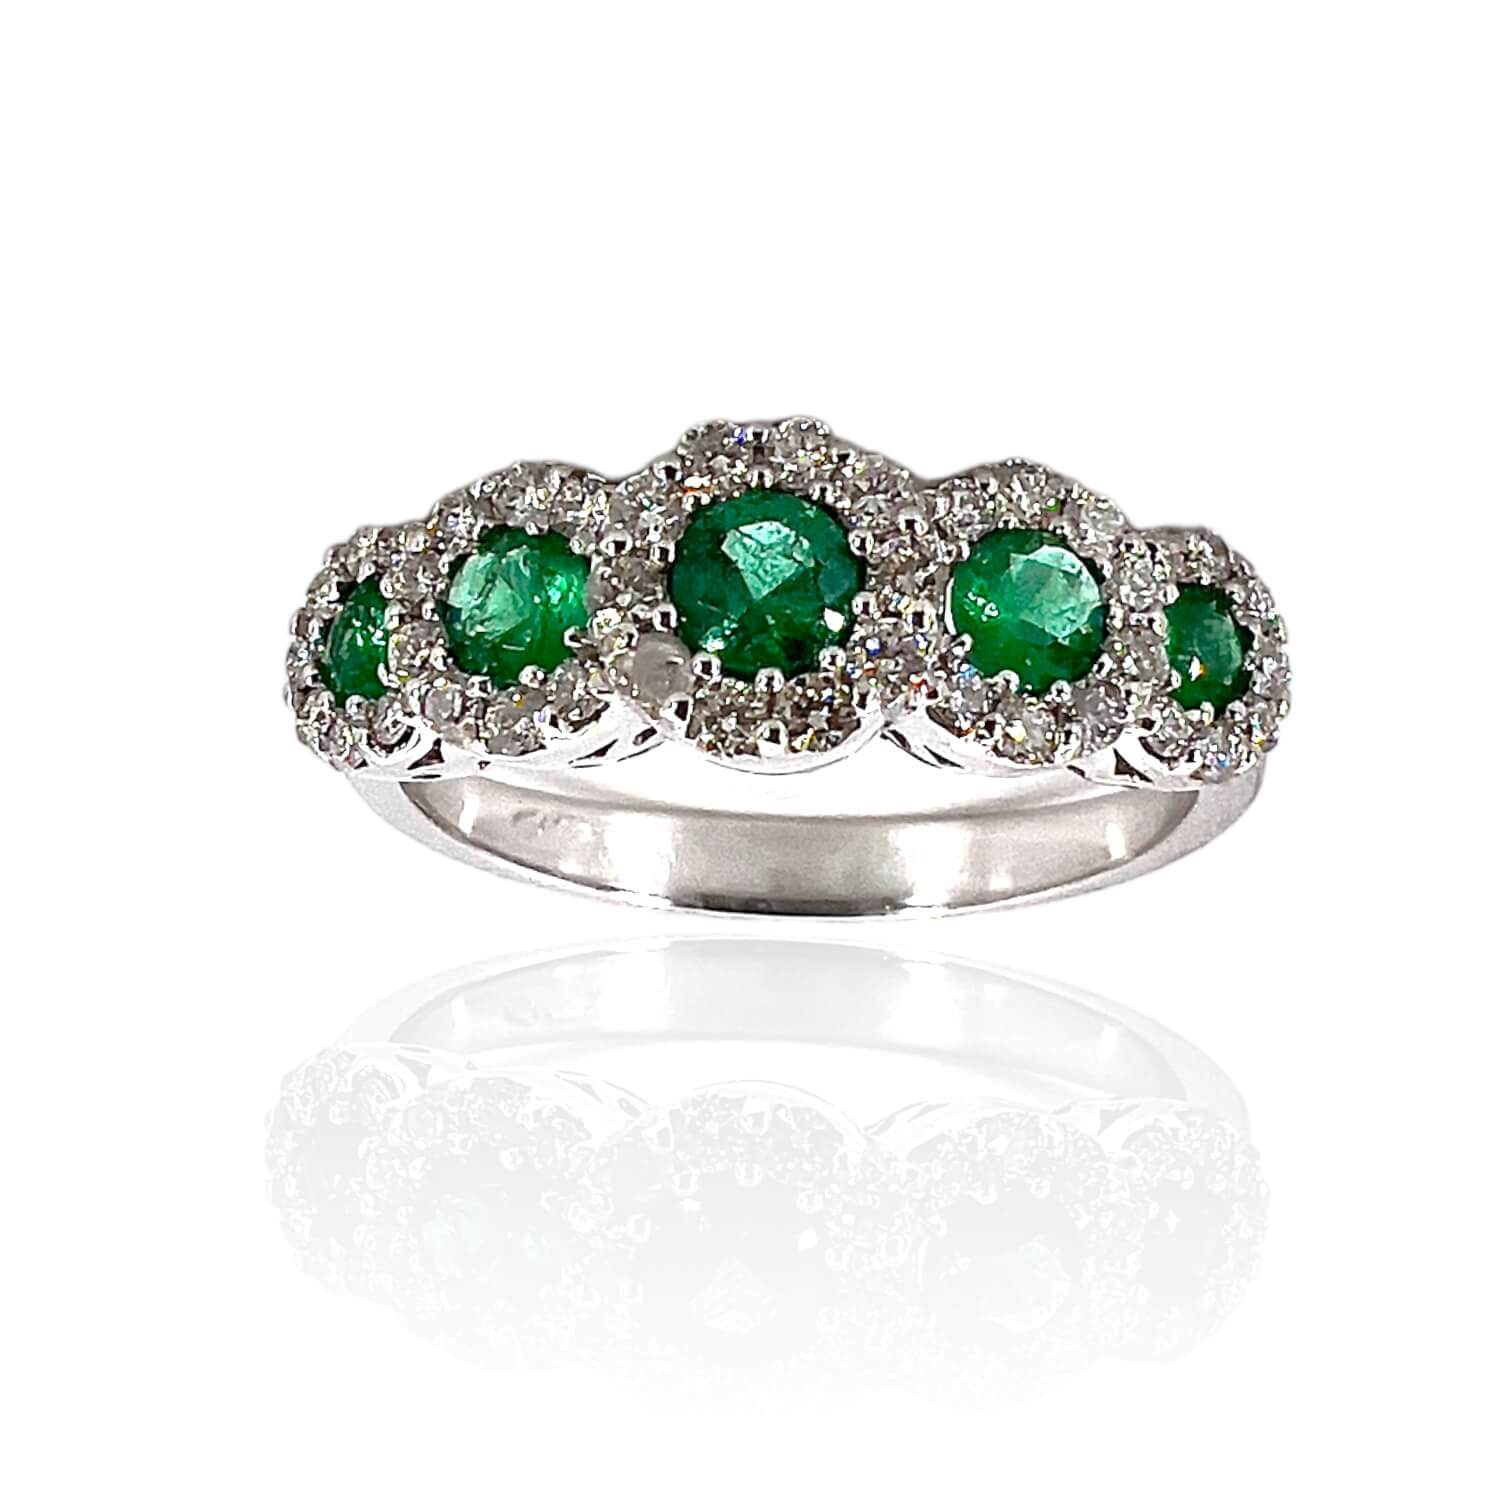 Emerald veretta ring and diamonds in white gold 750% BELLE EPOQUE ART. AN1838-2